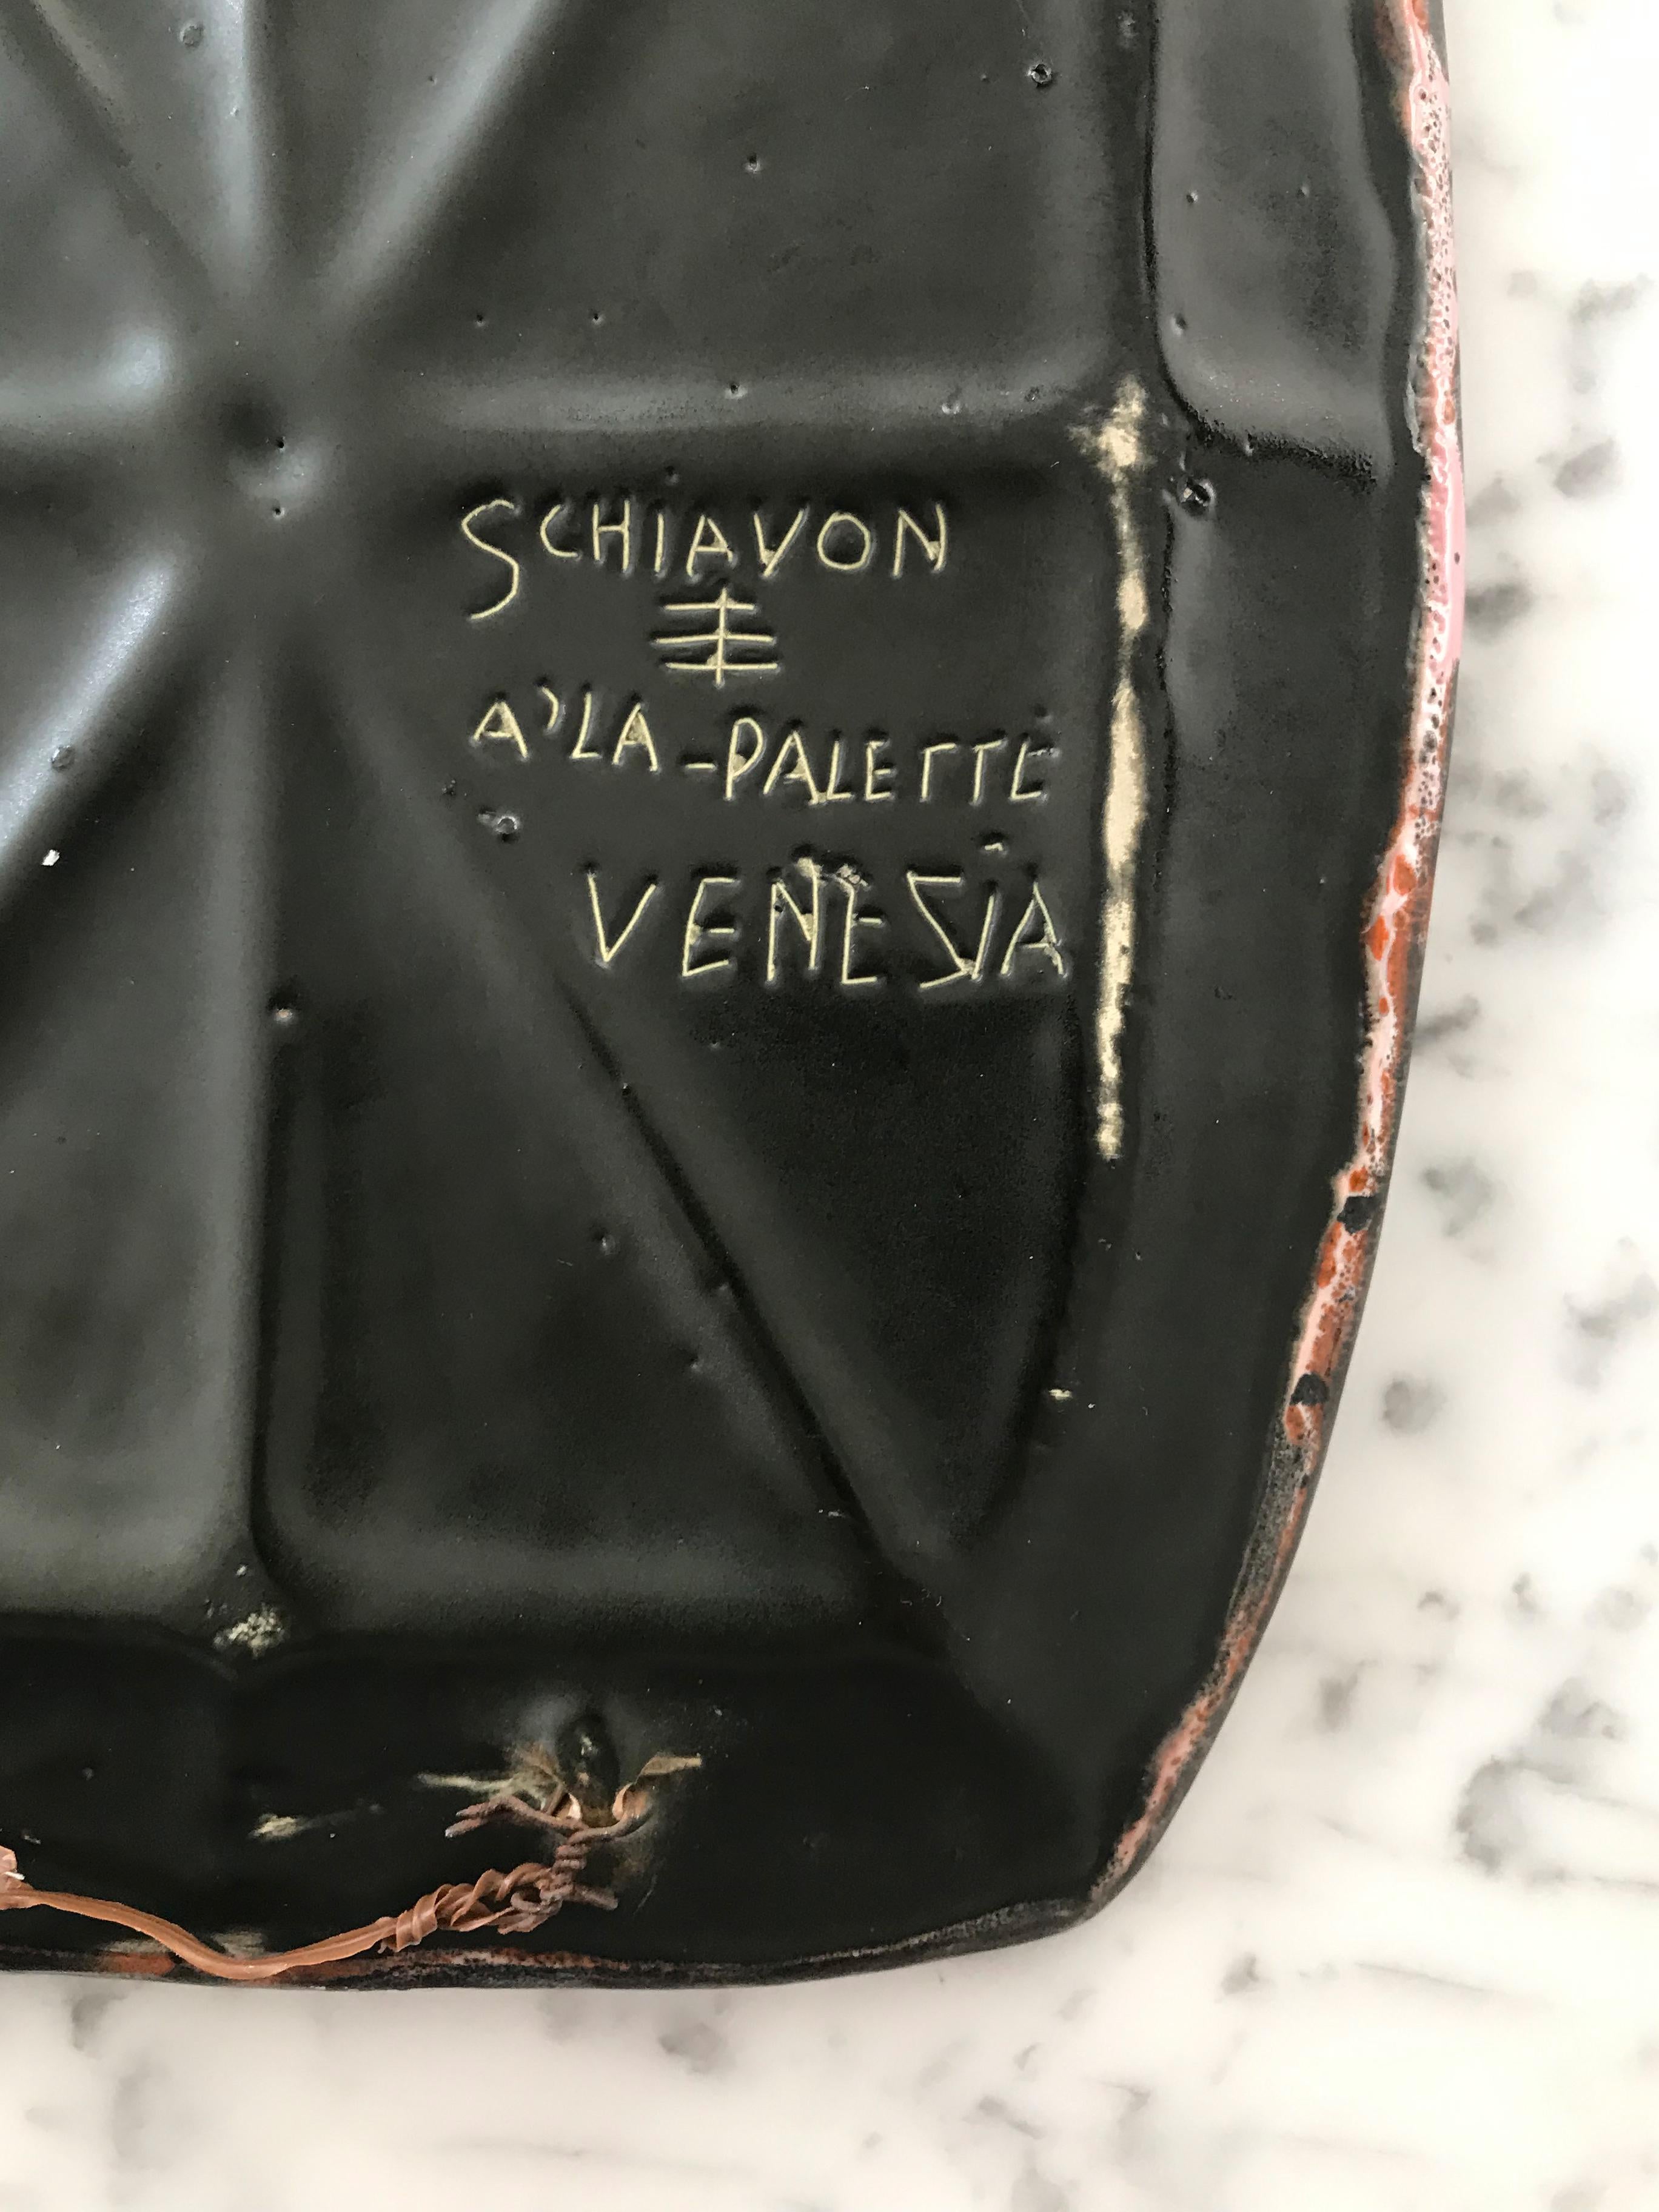 Elio Schaivon Venezia Italian Midcentury Ceramic Wall Plates 1960s For Sale 7